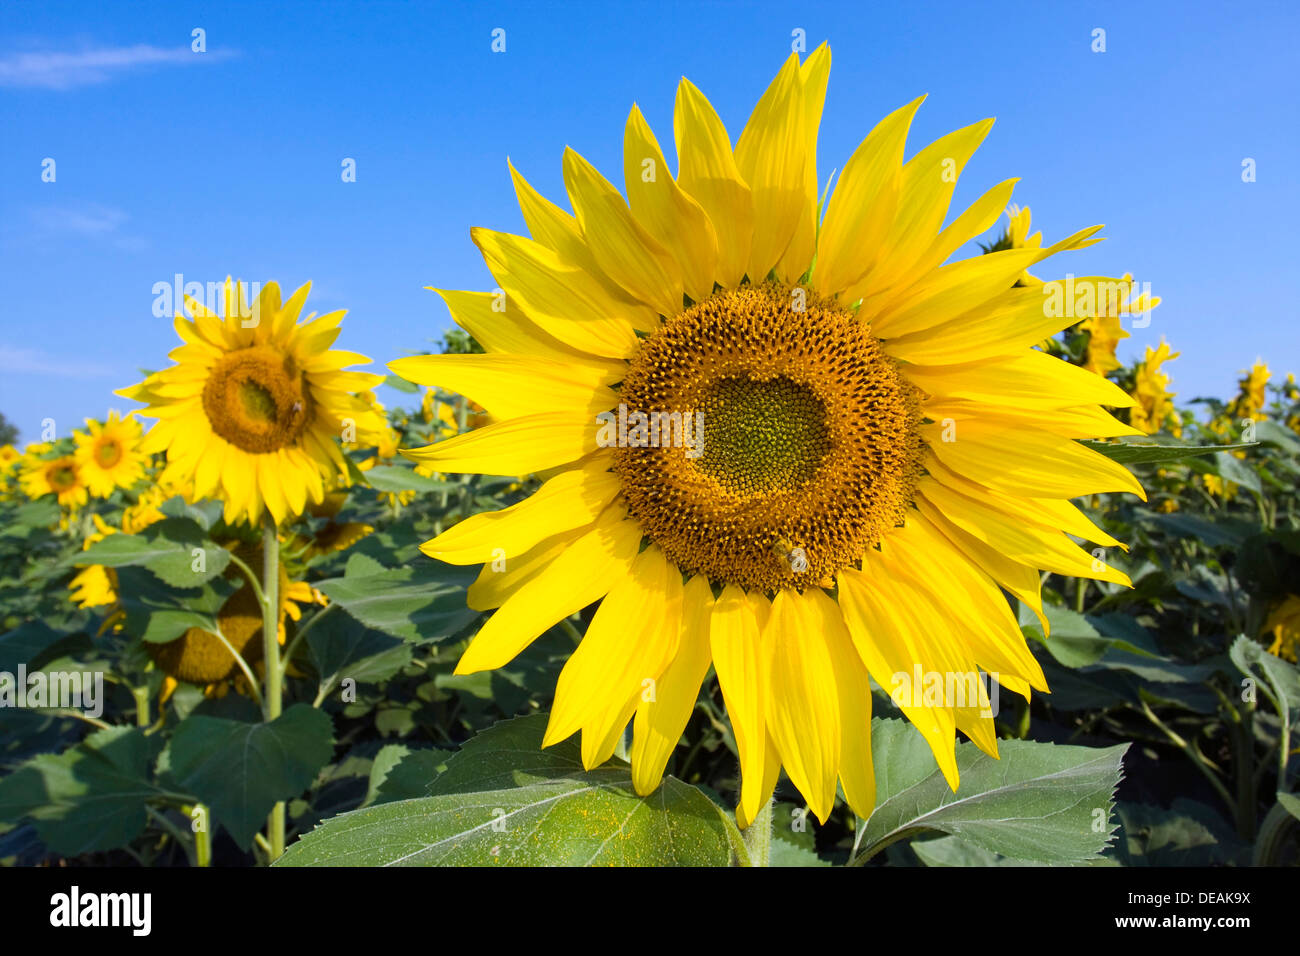 Sunflowers (Helianthus annuus) Stock Photo